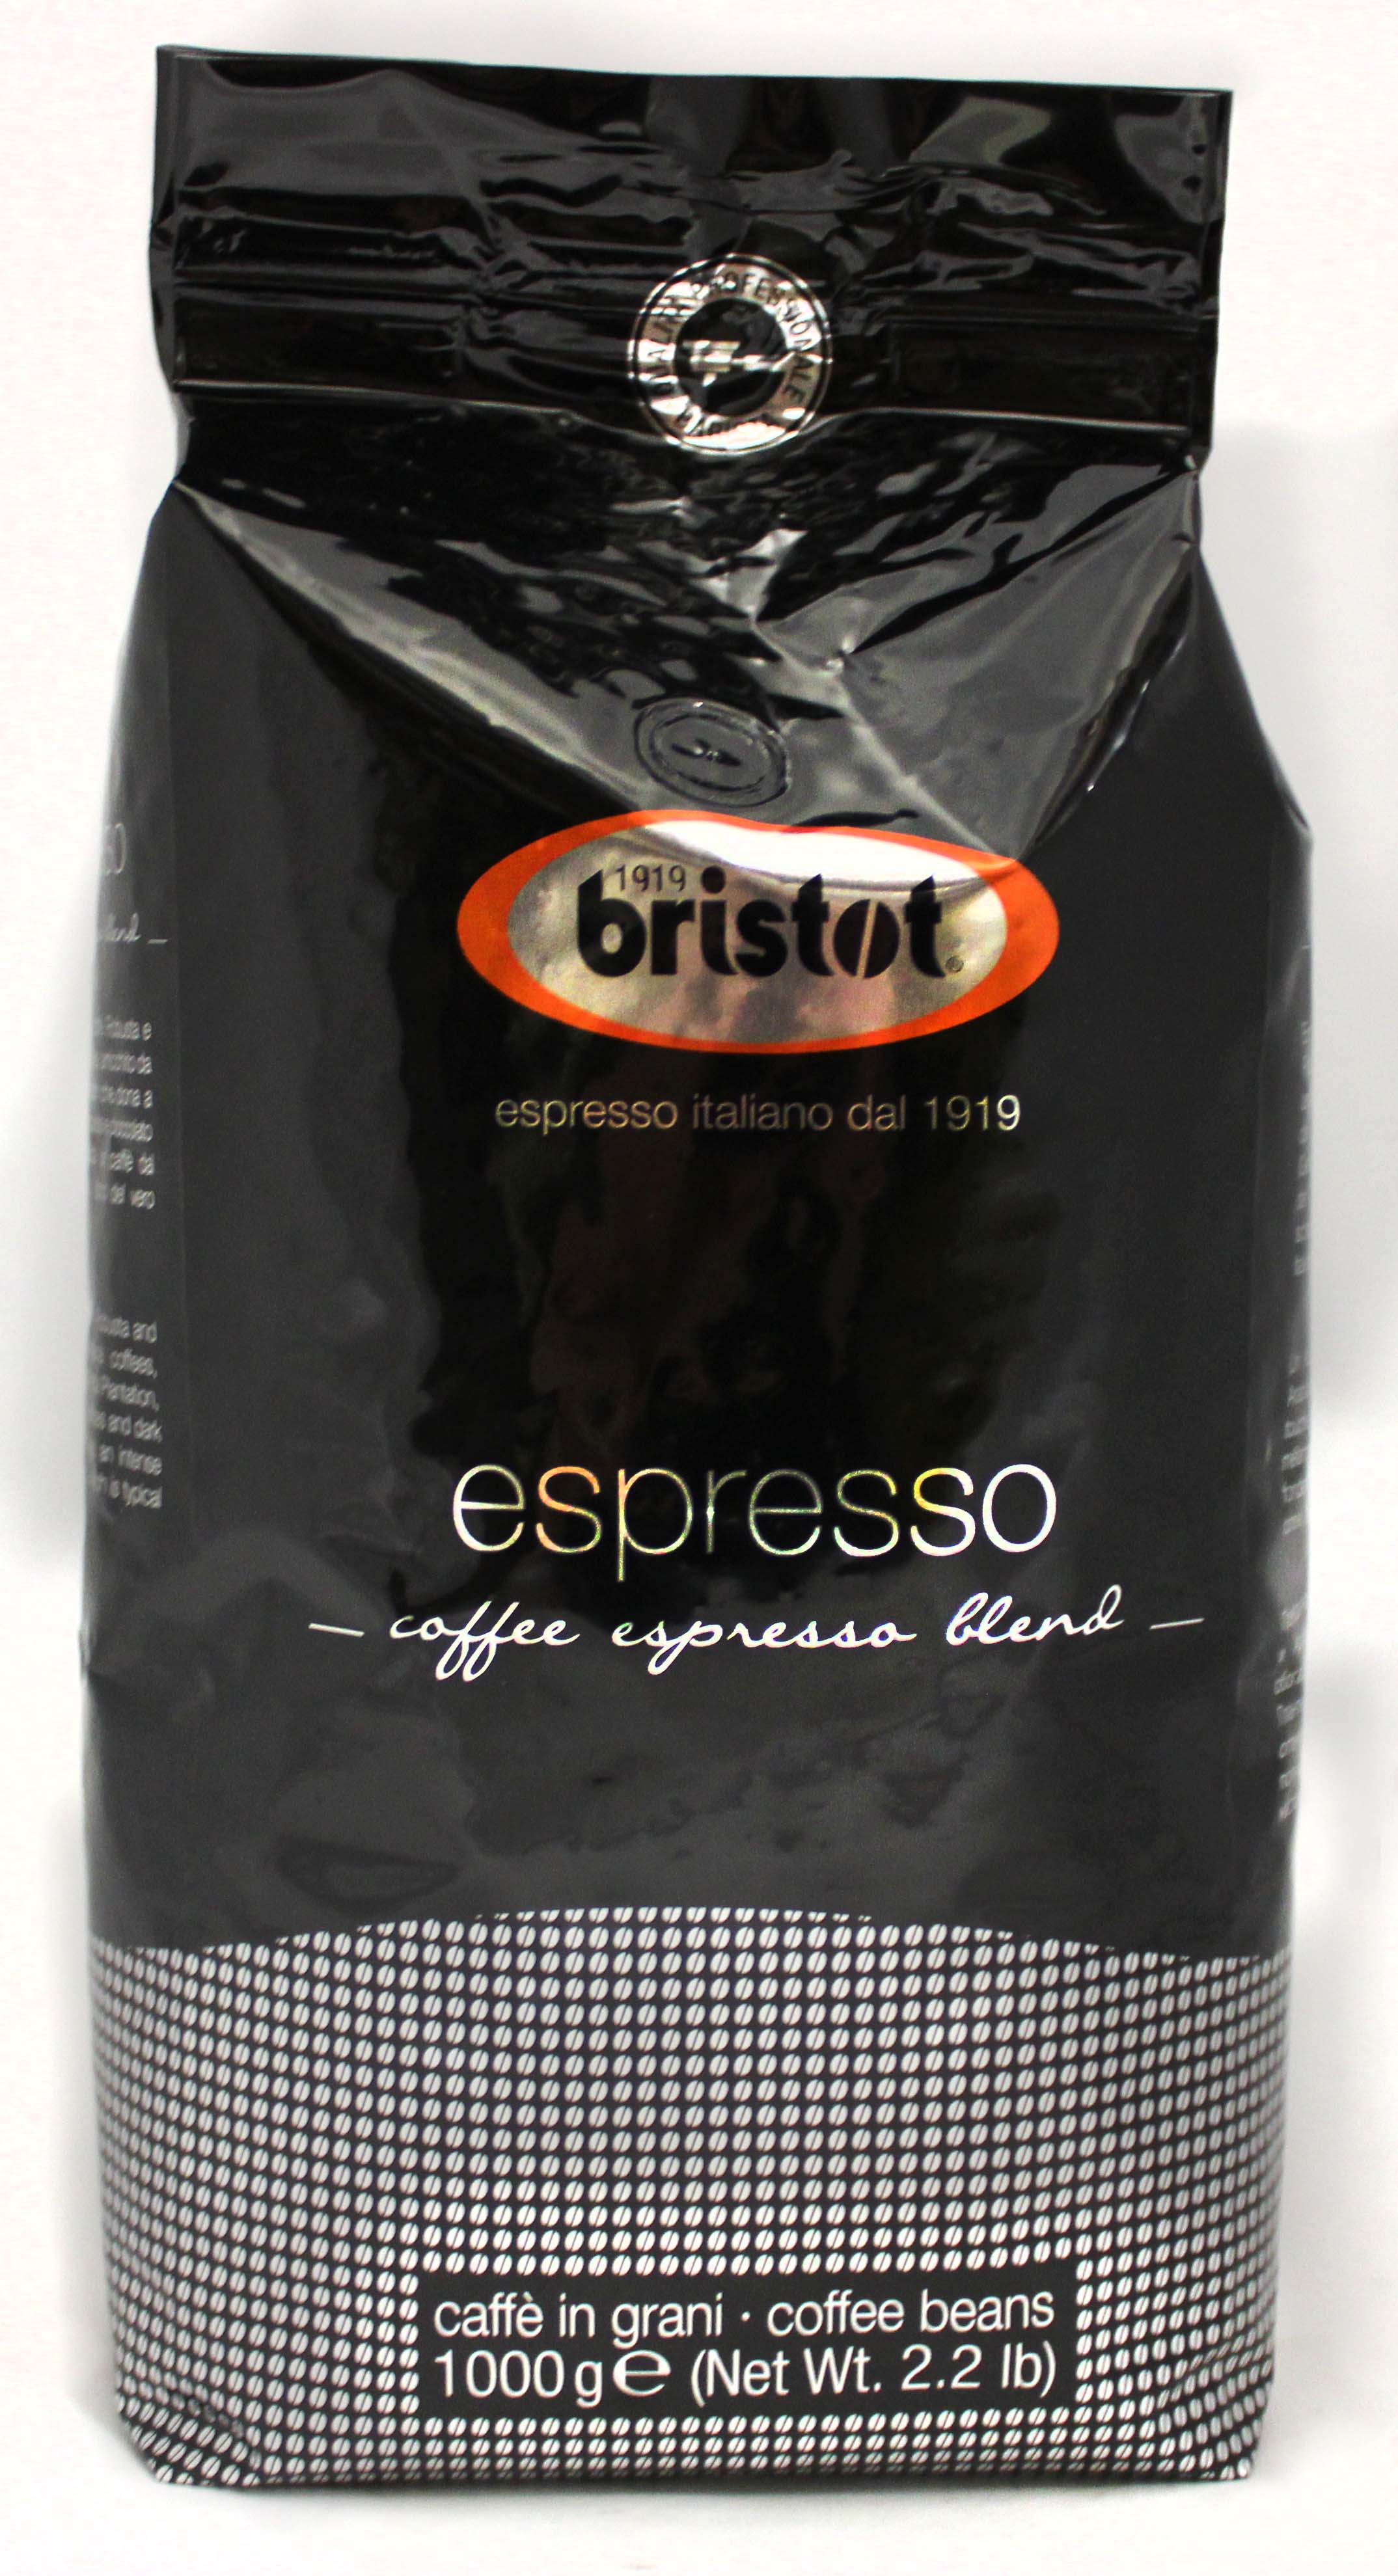 Bristot Bar Espresso Caffee 6x1kg